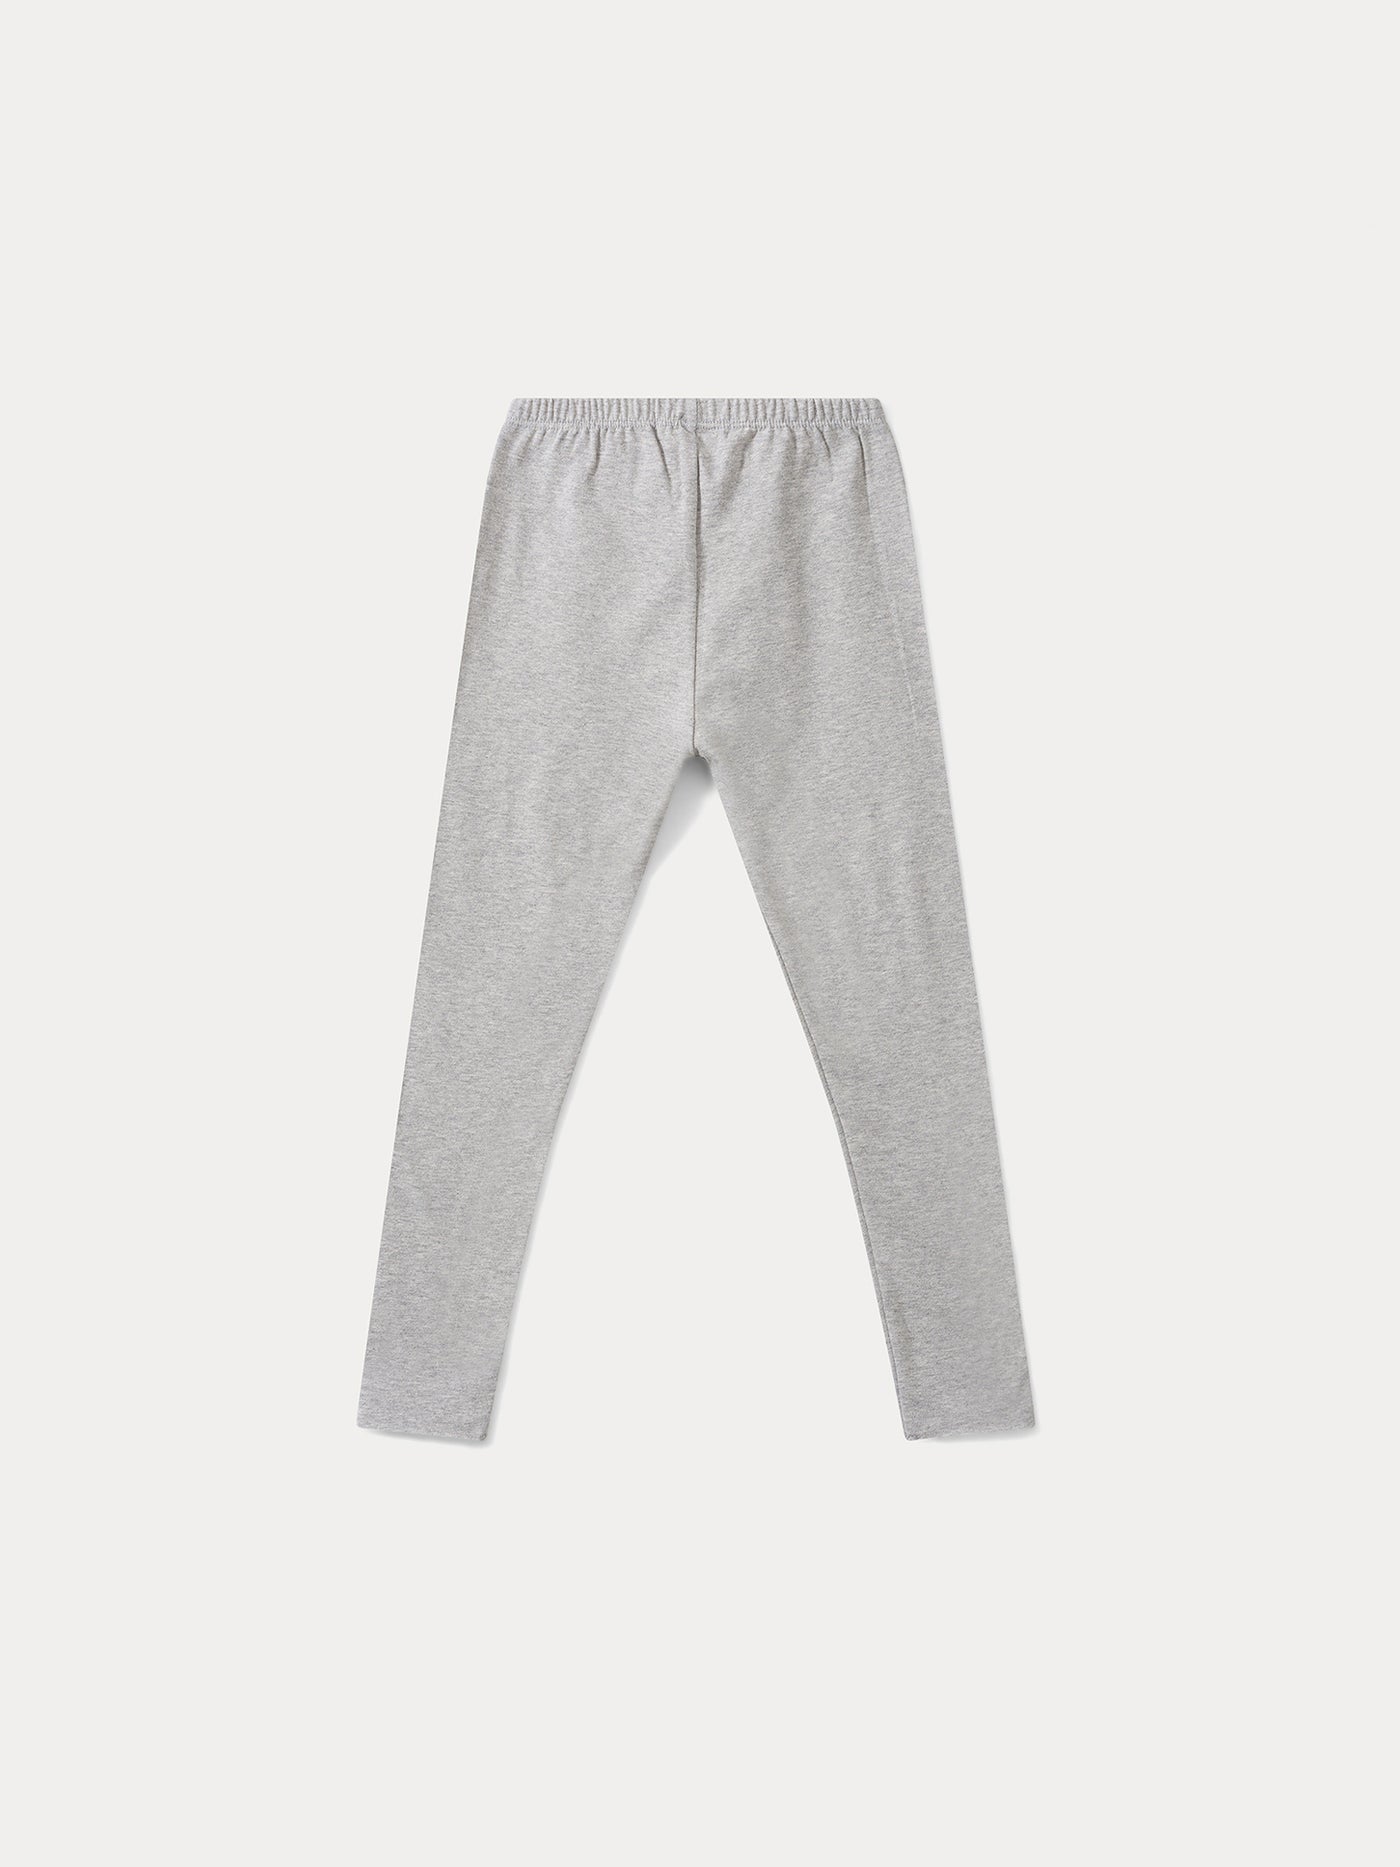 Plain leggings heathered gray